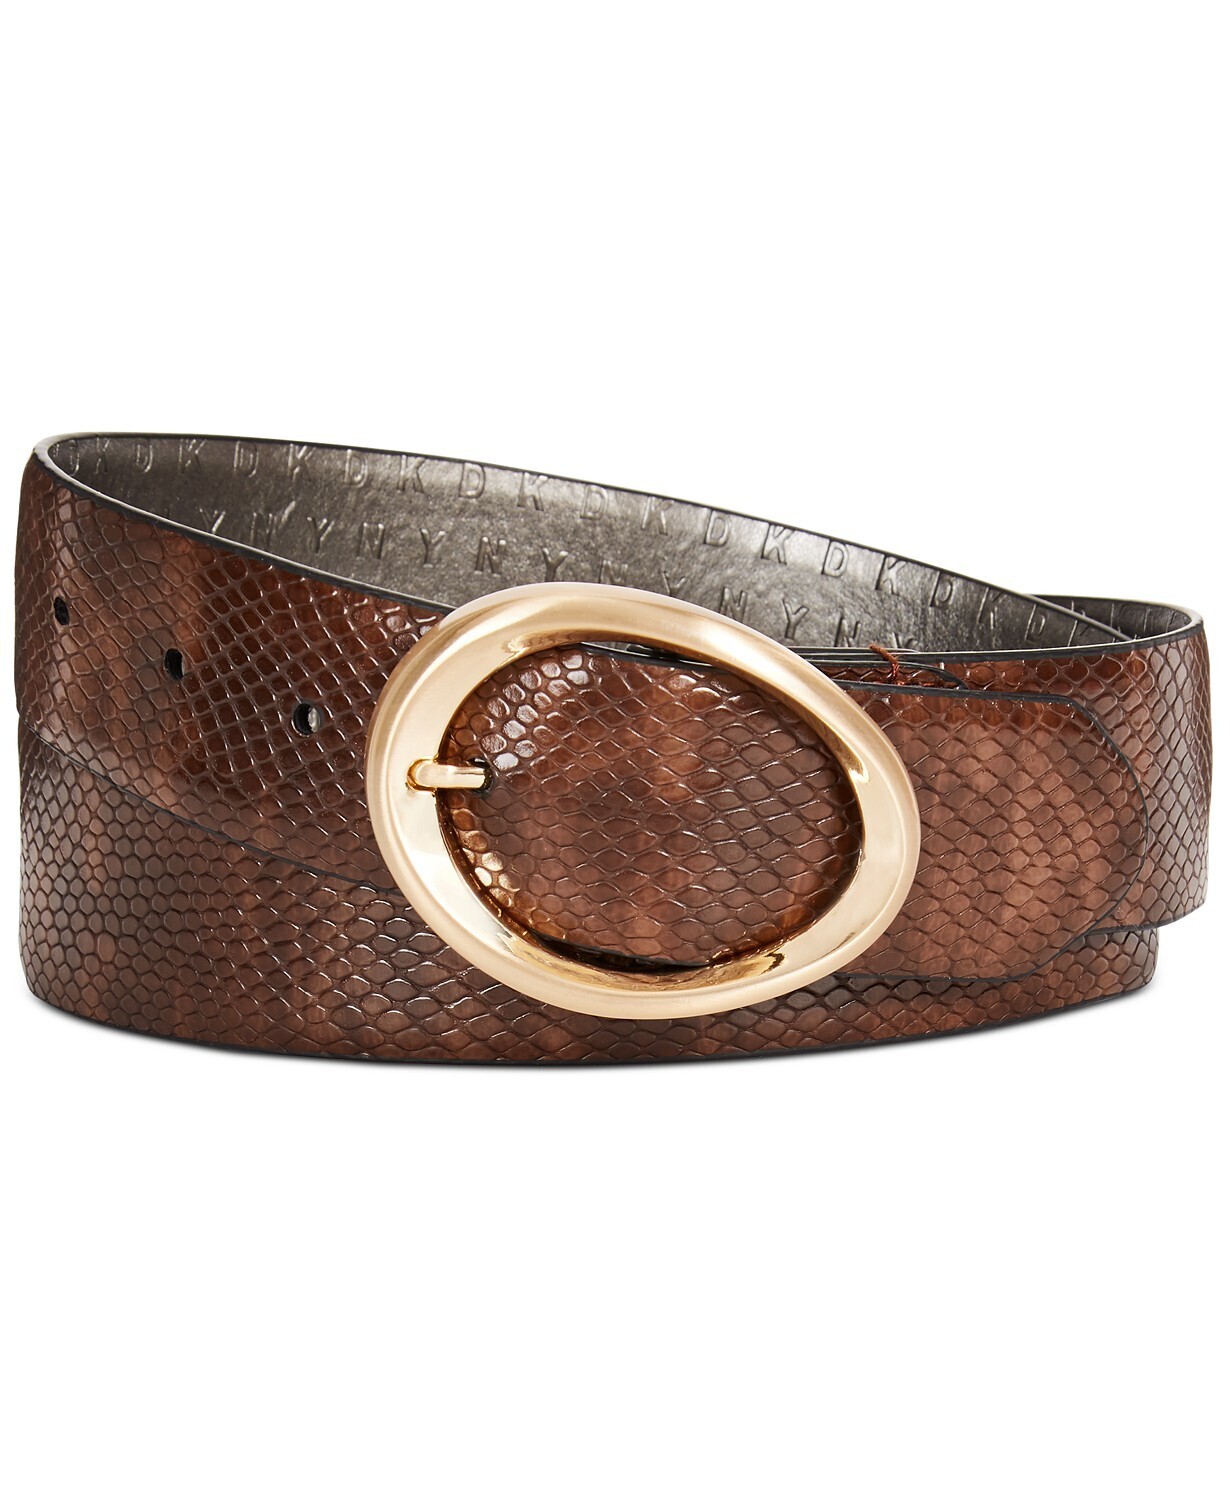 DKNY Women's Snake-Embossed Belt with Oval Buckle Belt, Brown, M